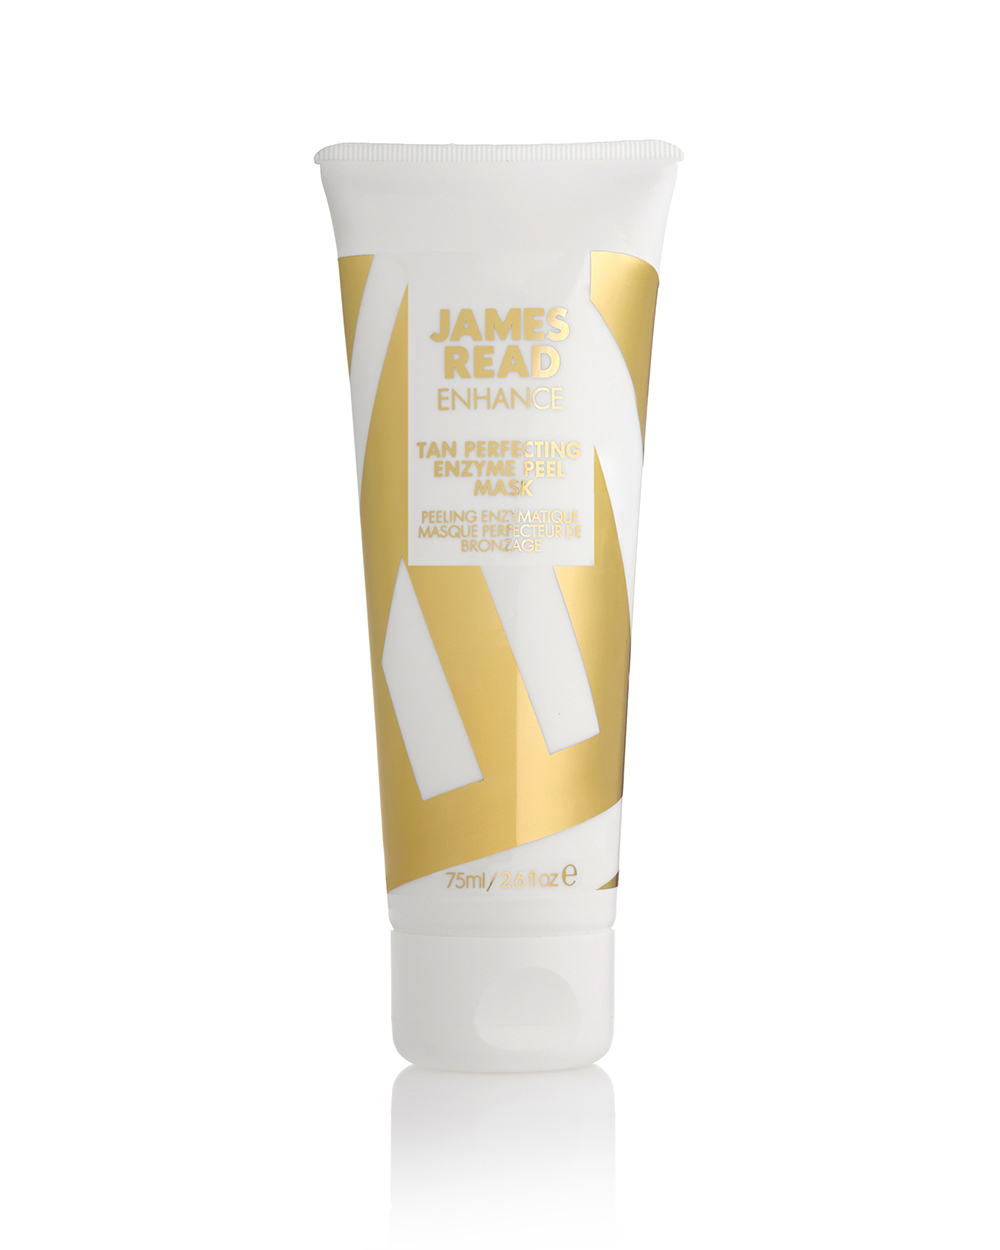 BODY PEELS James Read Enhance Tan Perfecting Enzyme Peel Mask